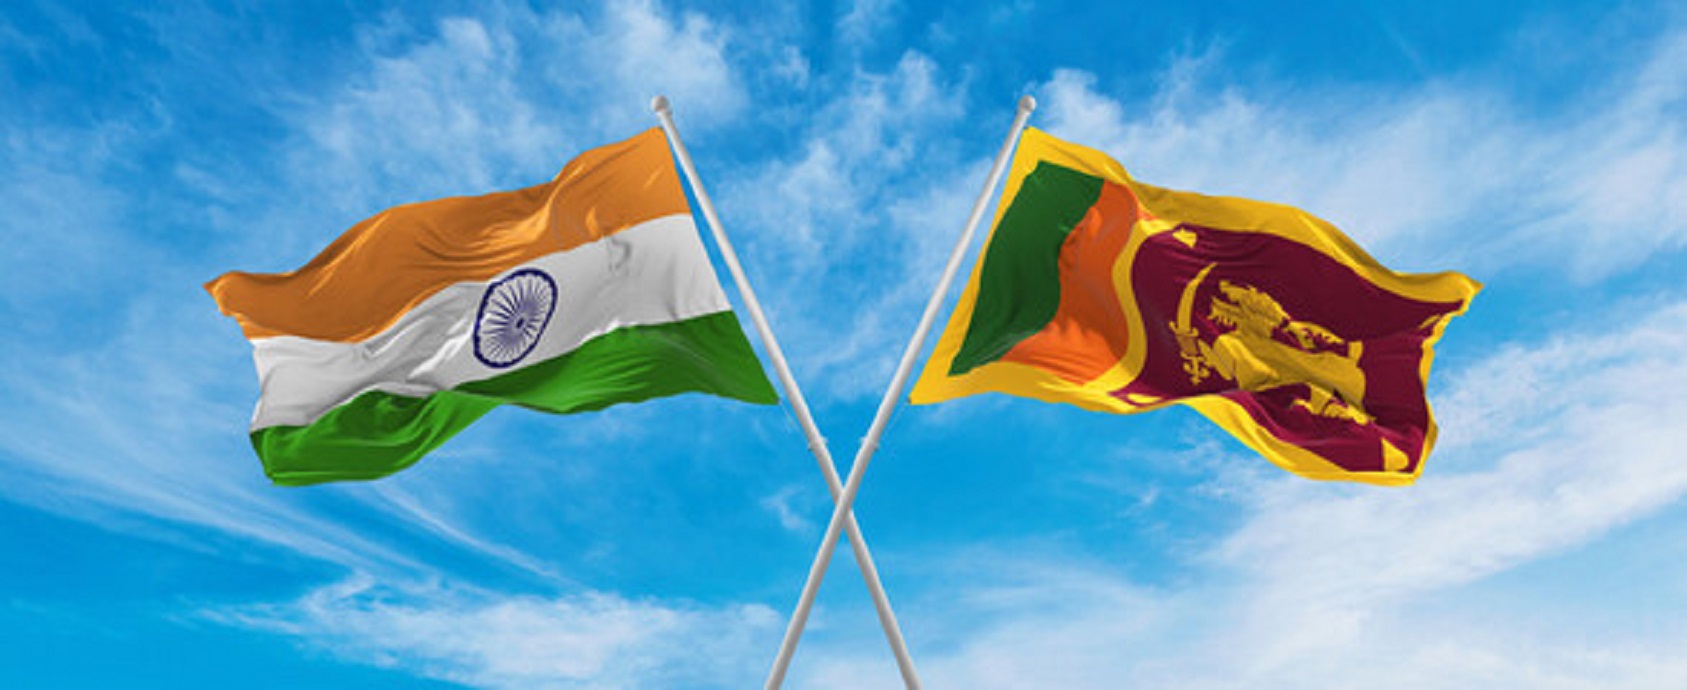 India gave USD 4 billion to Sri Lanka’s emergency assistance